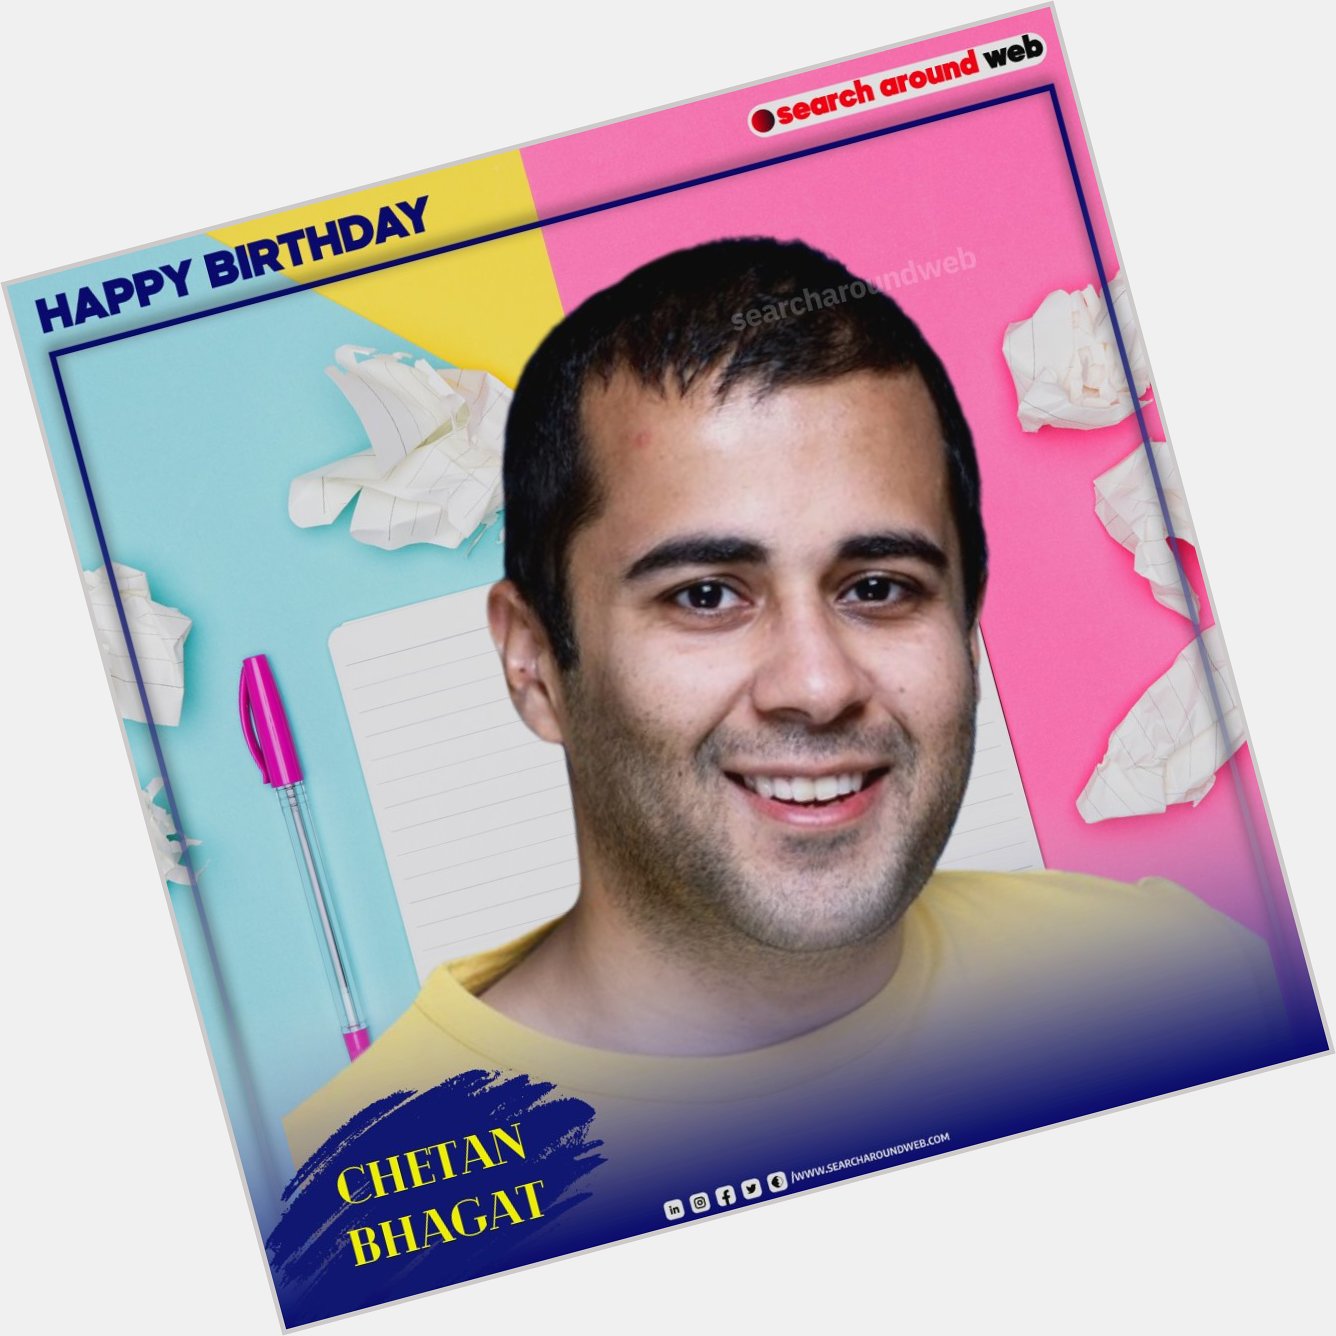  Happy Birthday - Chetan Bhagat     